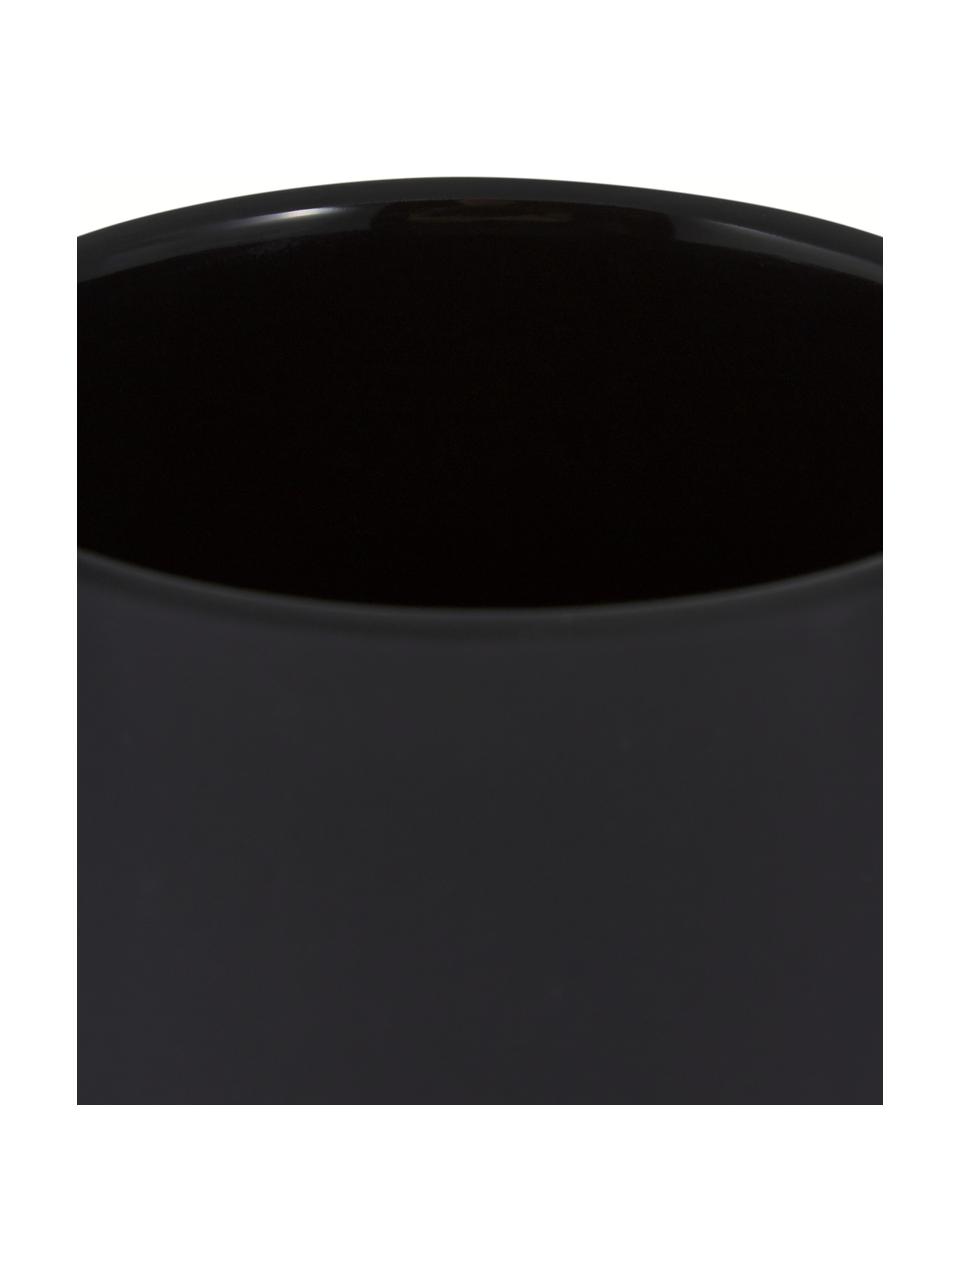 Zeepdispenser Ume van keramiek met soft-touch oppervlak, Zwart, Ø 8 x H 13 cm